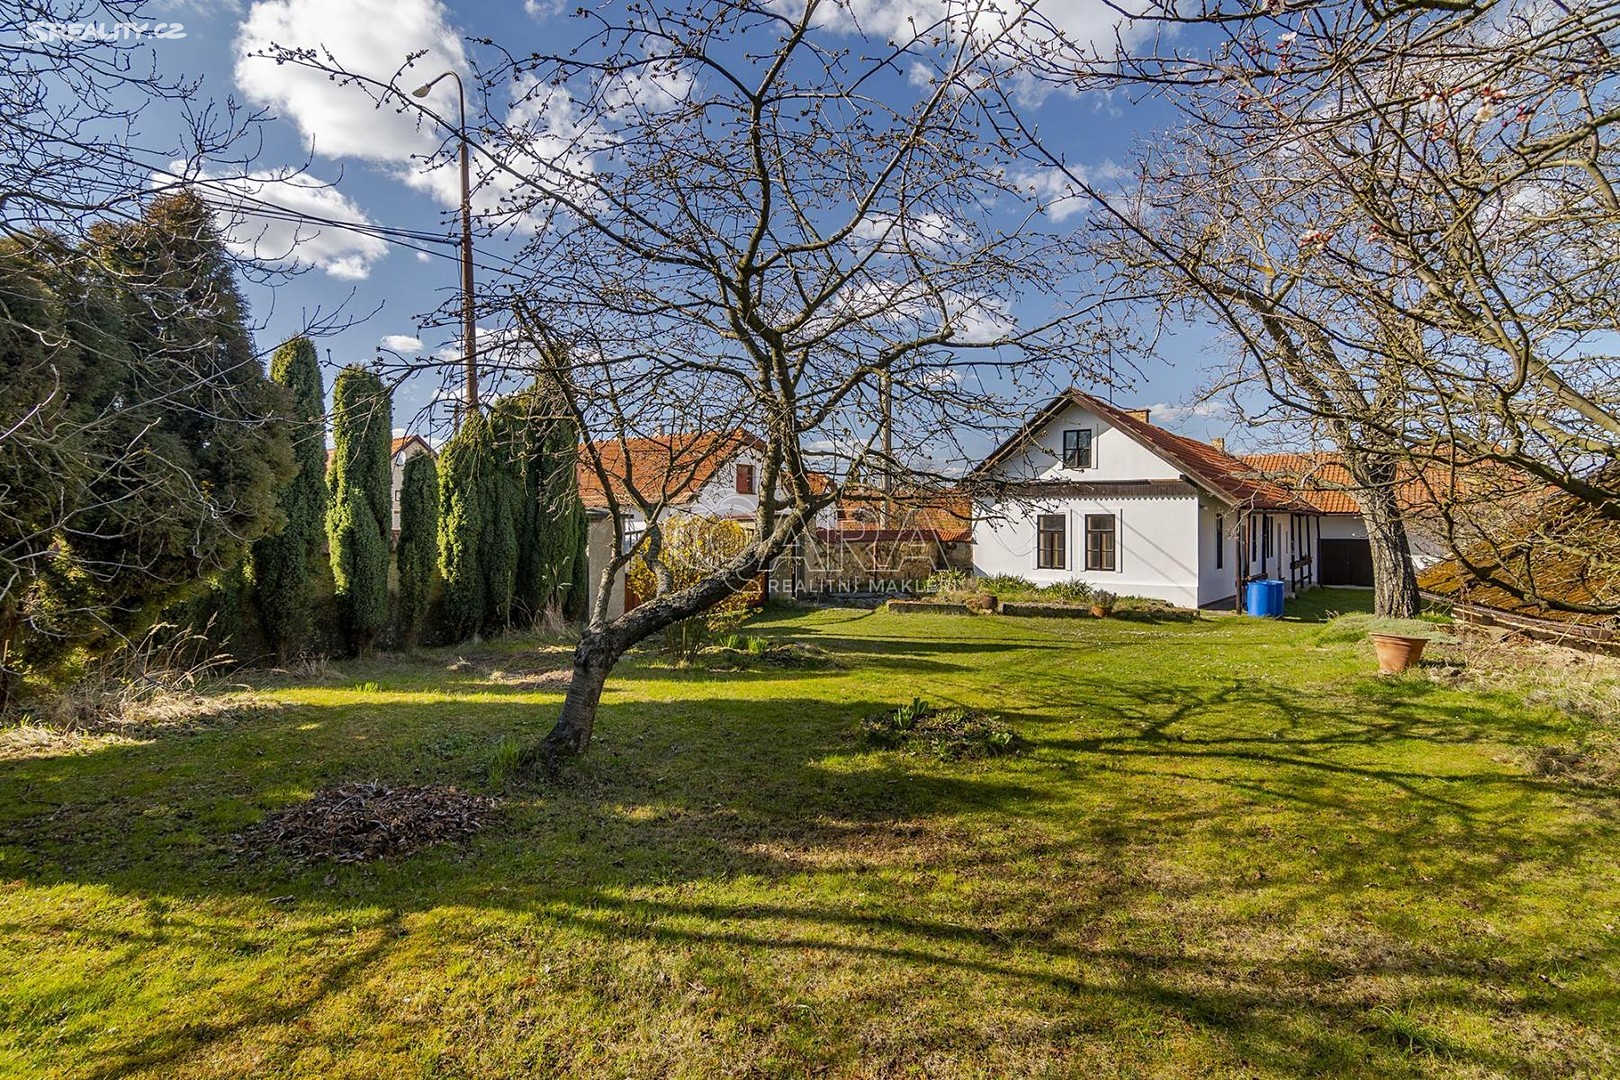 Prodej  rodinného domu 260 m², pozemek 1 003 m², Oleška - Bulánka, okres Praha-východ